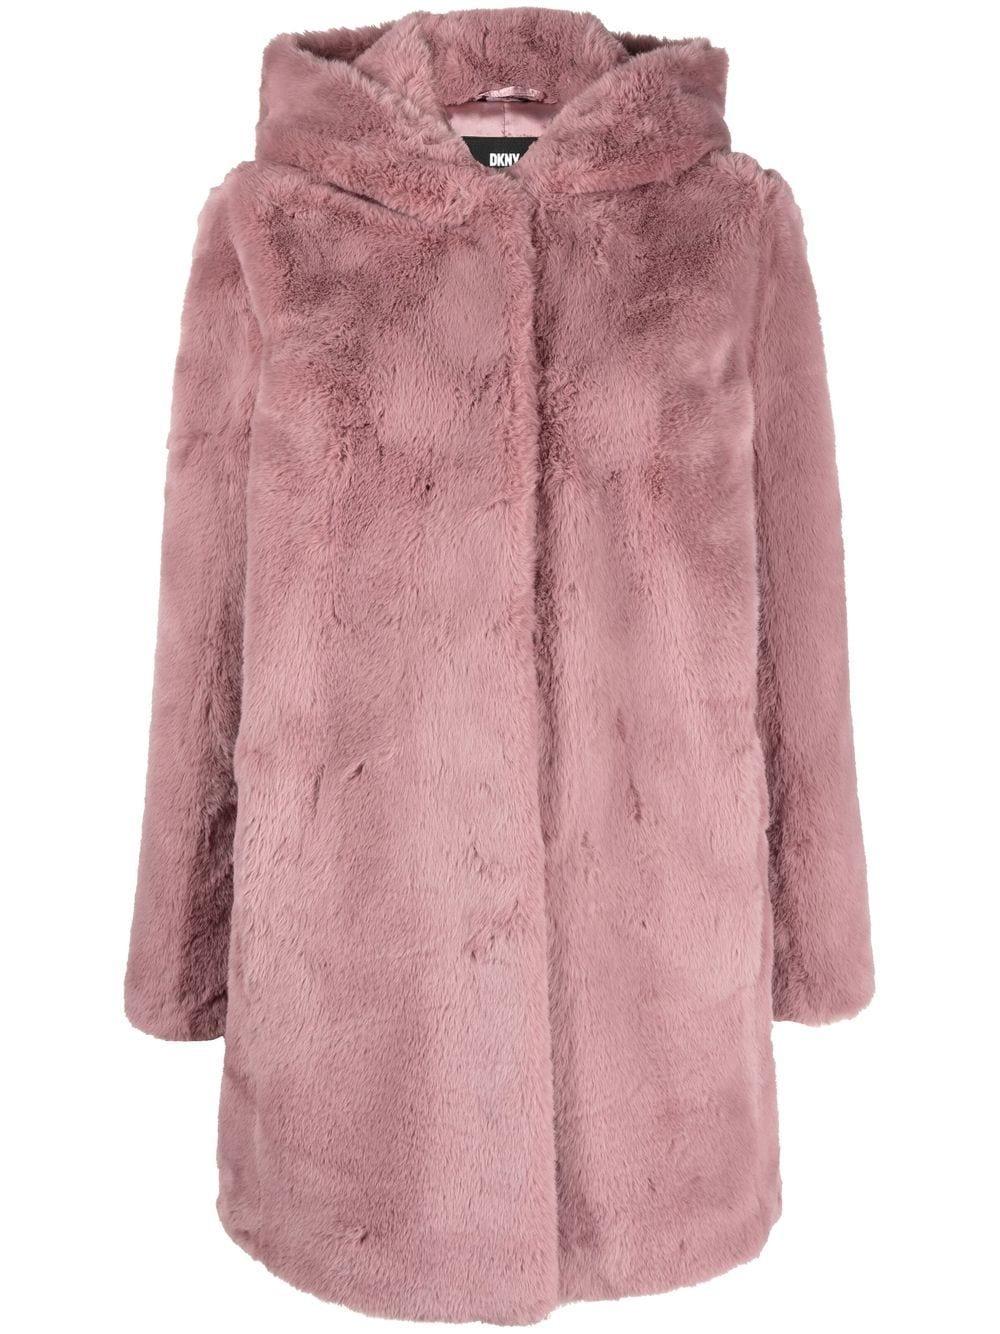 DKNY Faux Fur Hooded Coat in Pink | Lyst Canada